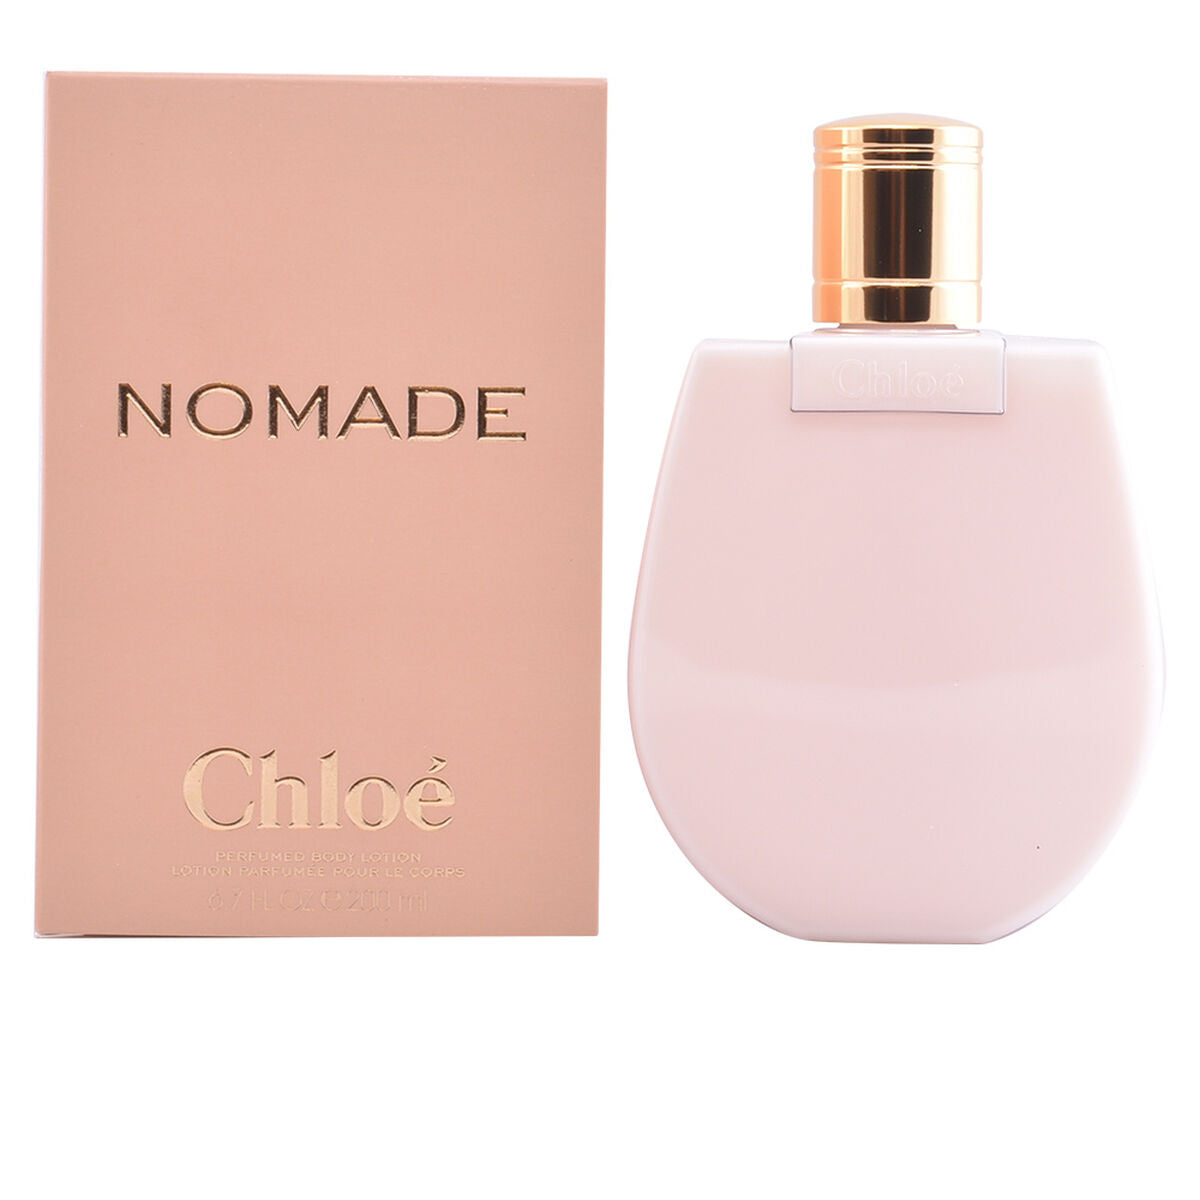 Body Lotion Chloe Nomade (200 ml)